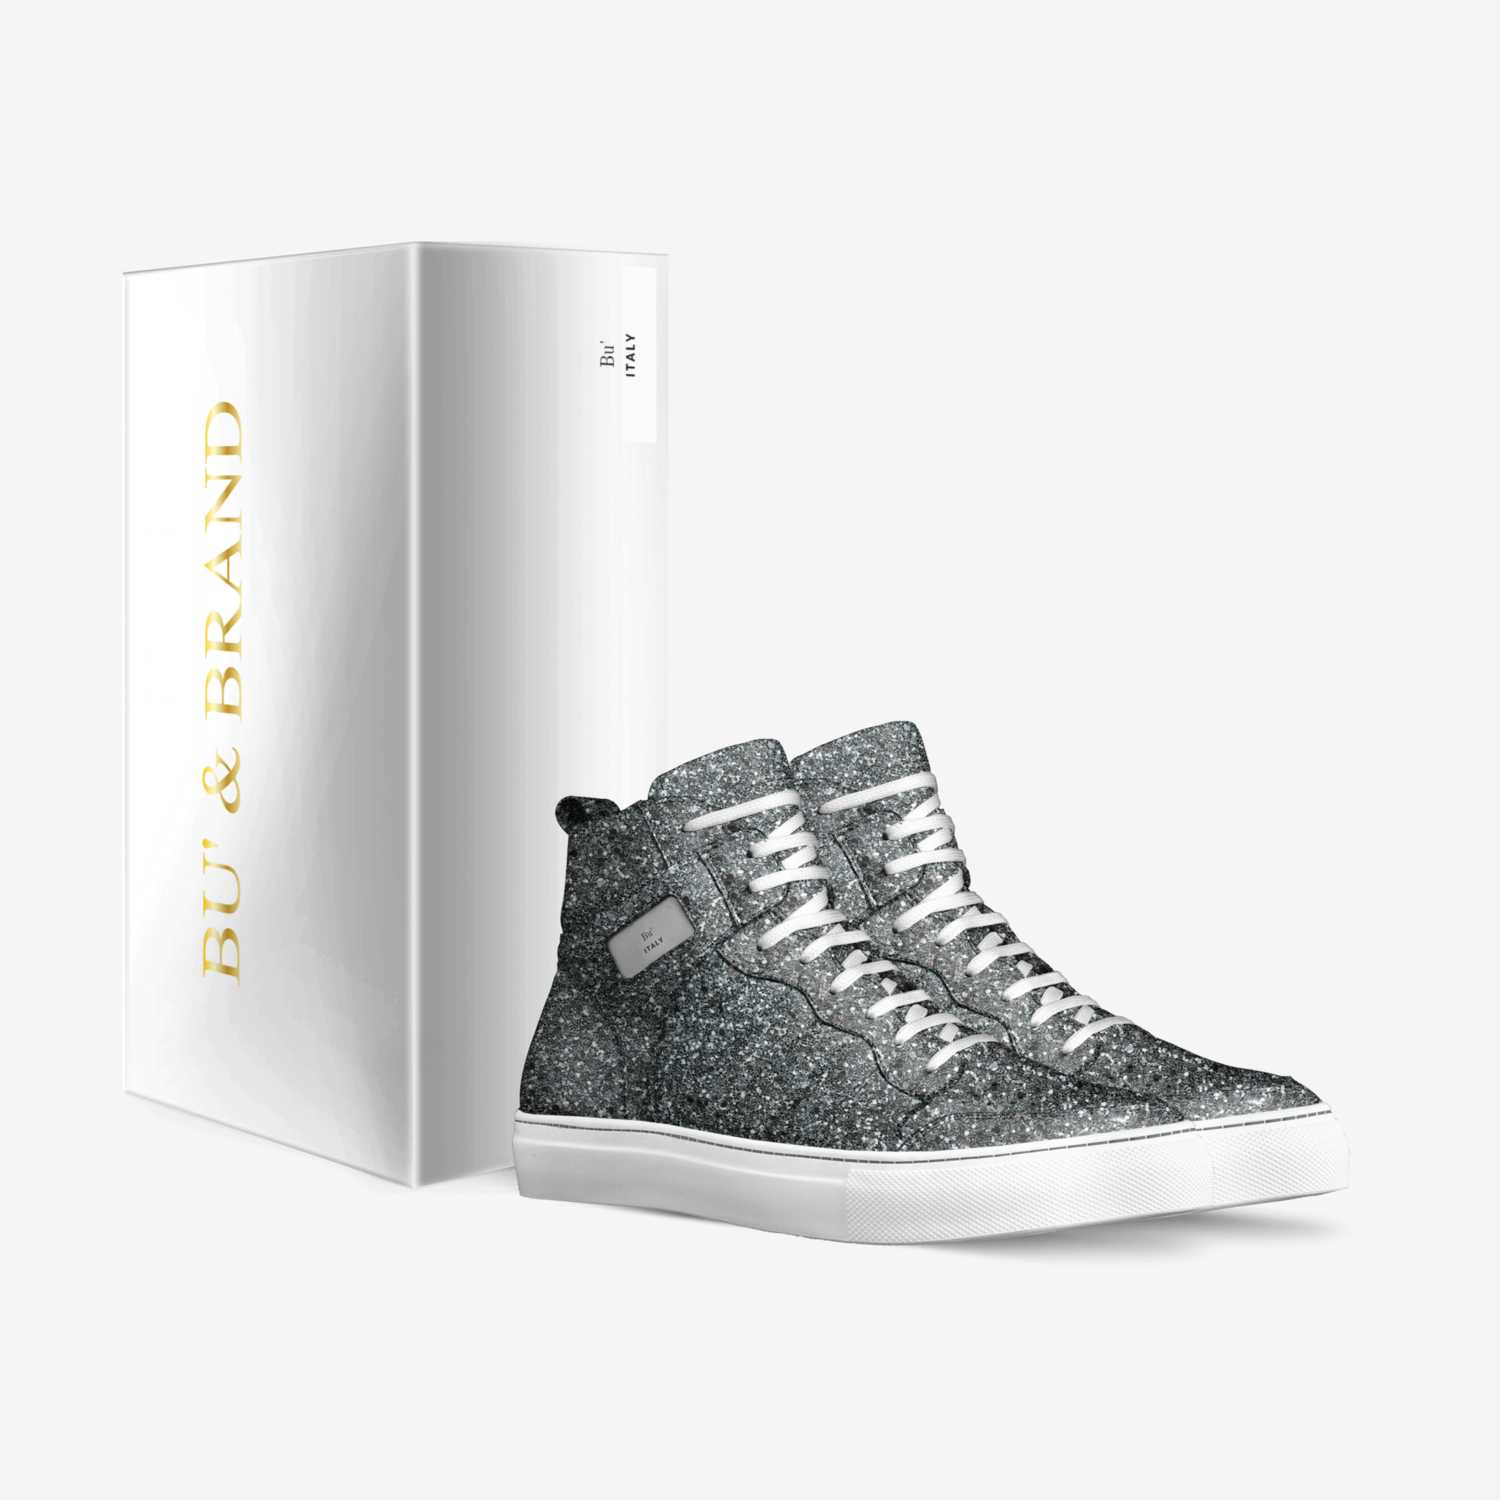 Inovative Glitts custom made in Italy shoes by X Bu Italy | Box view